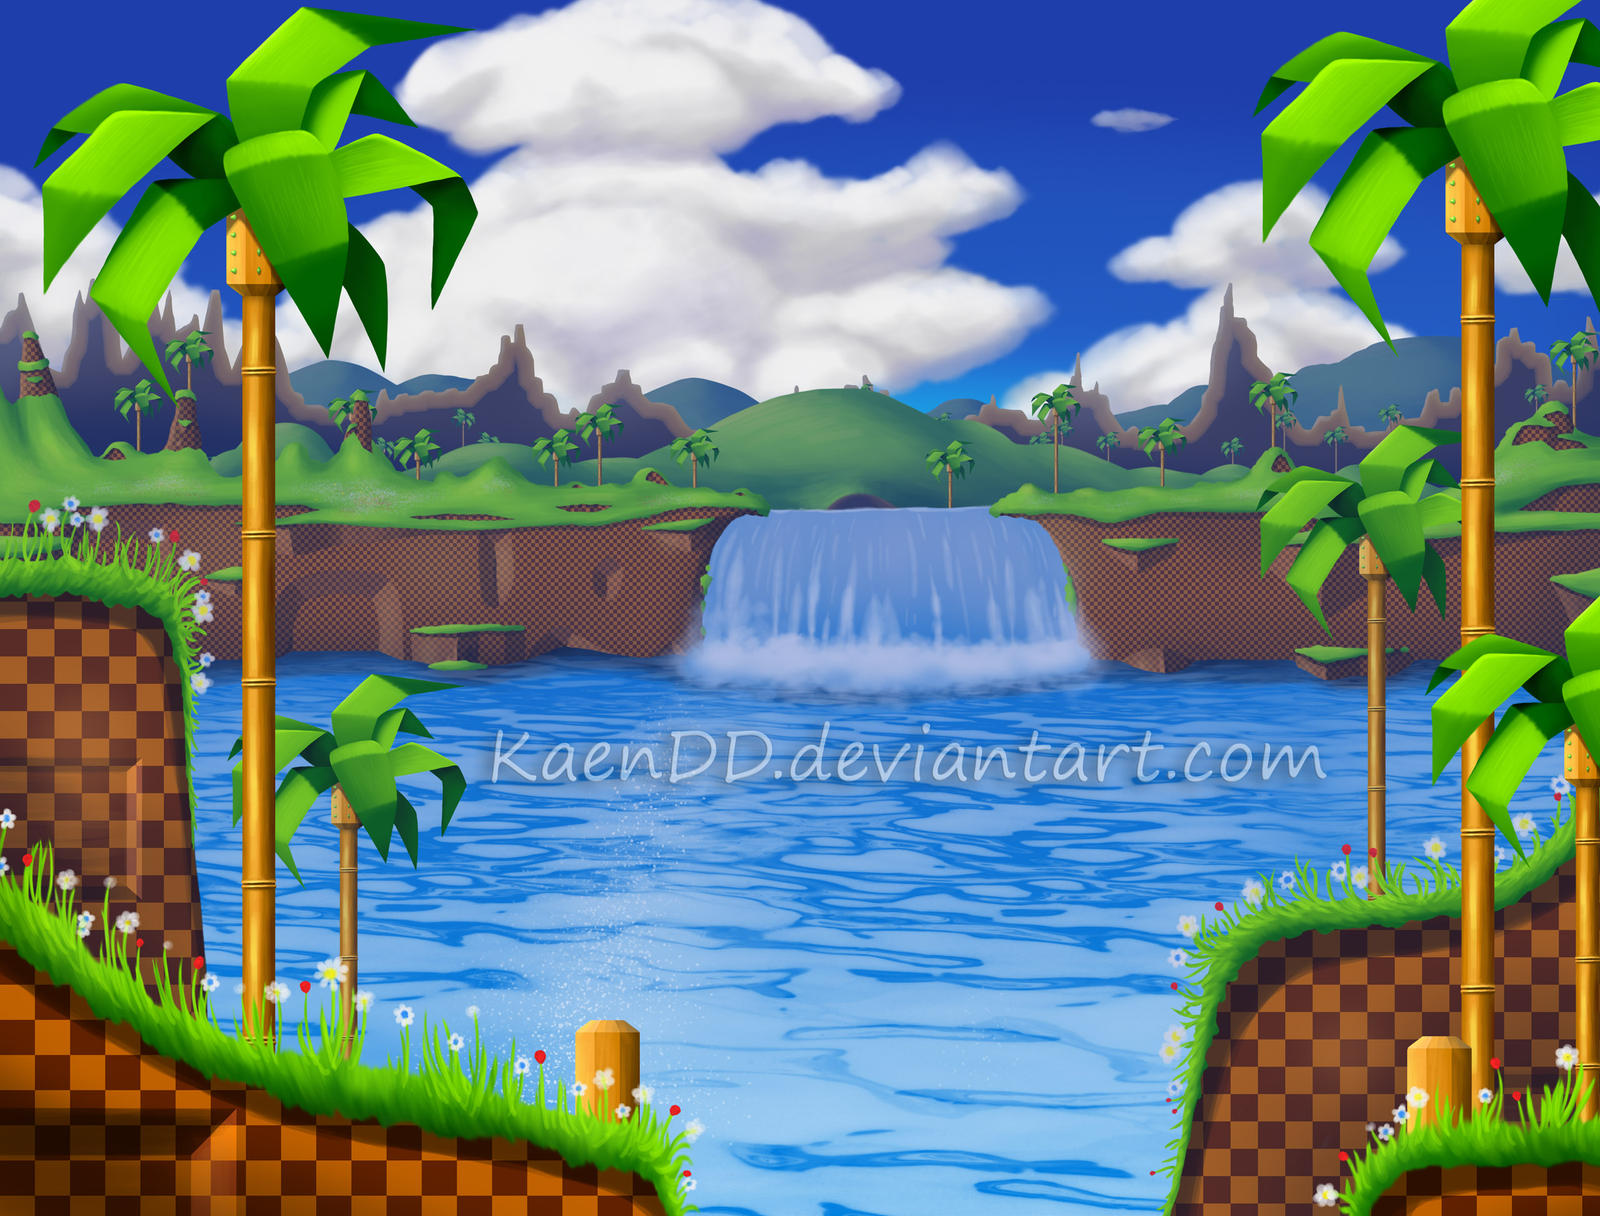 Sonic 1 HD: Green Hill Zone by Hyperchaotix on DeviantArt